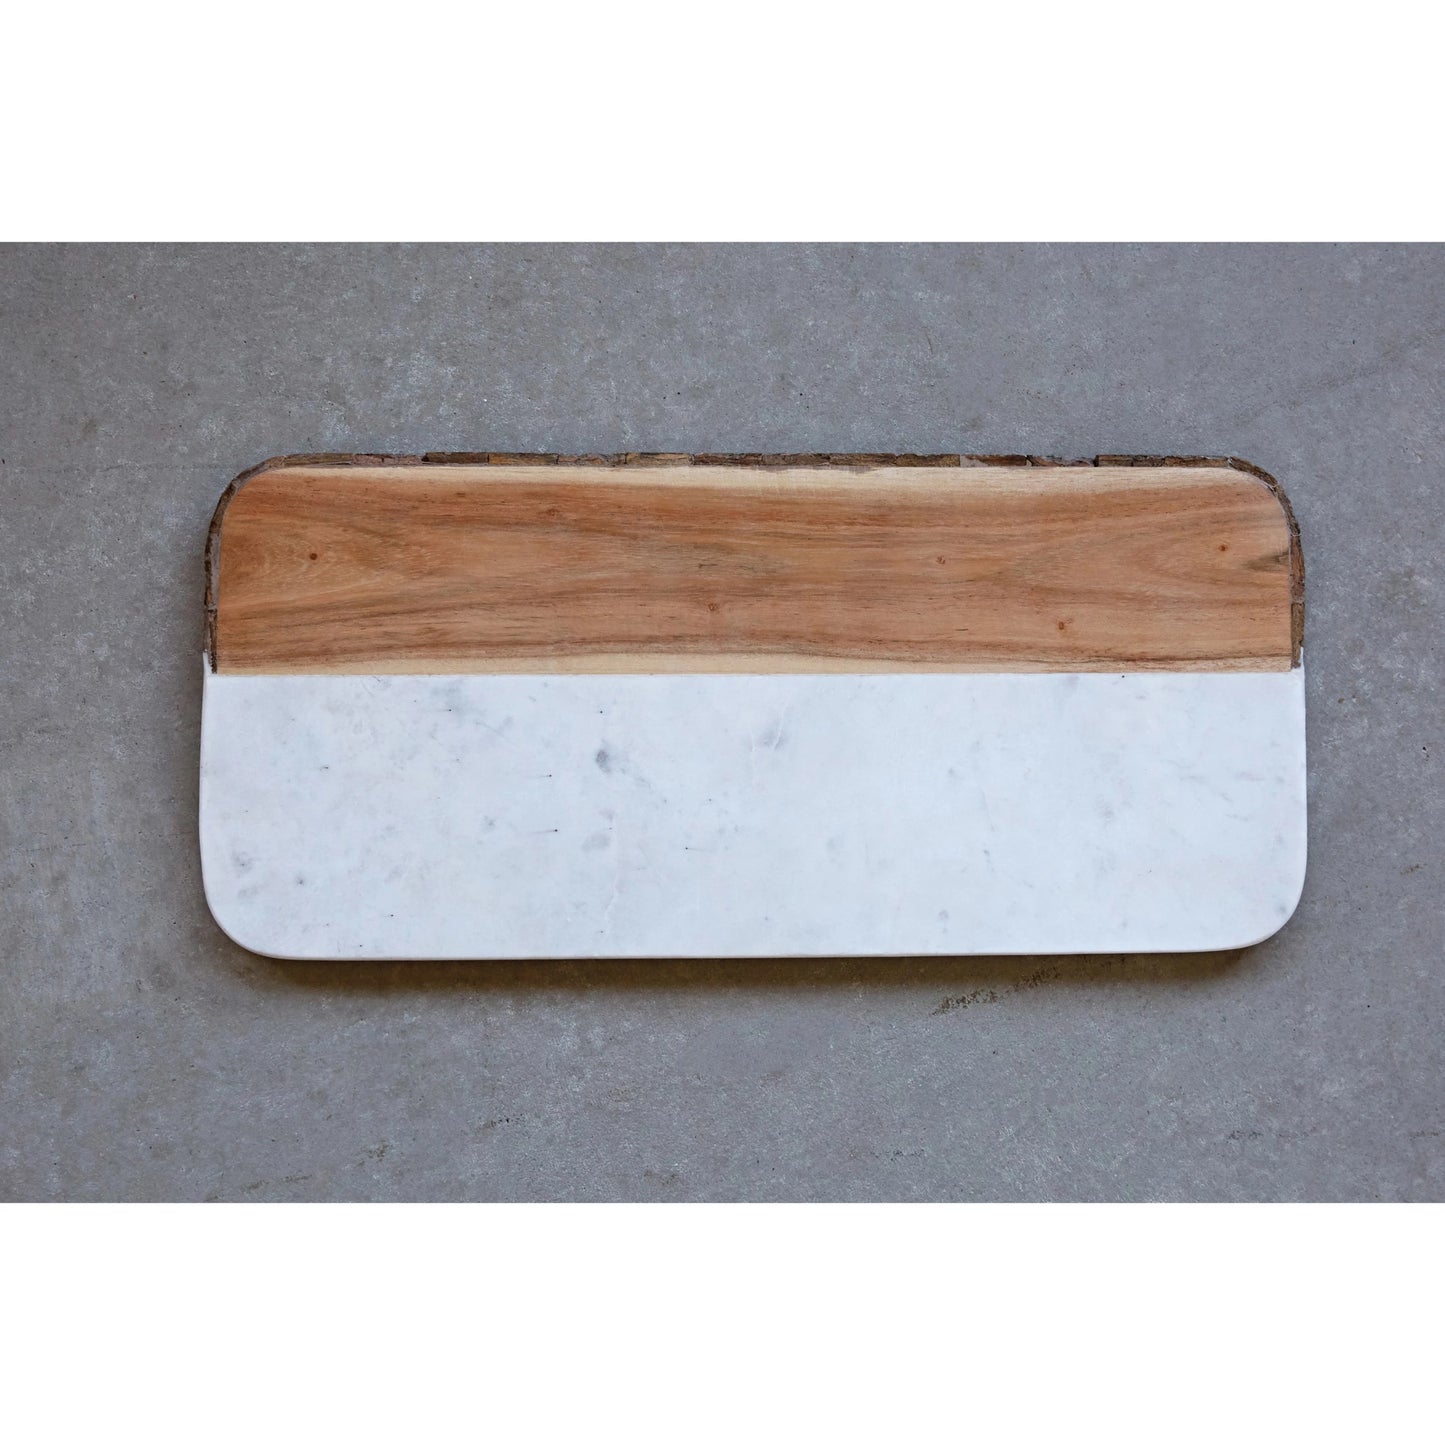 Cheese/Cutting Board with Bark Edge